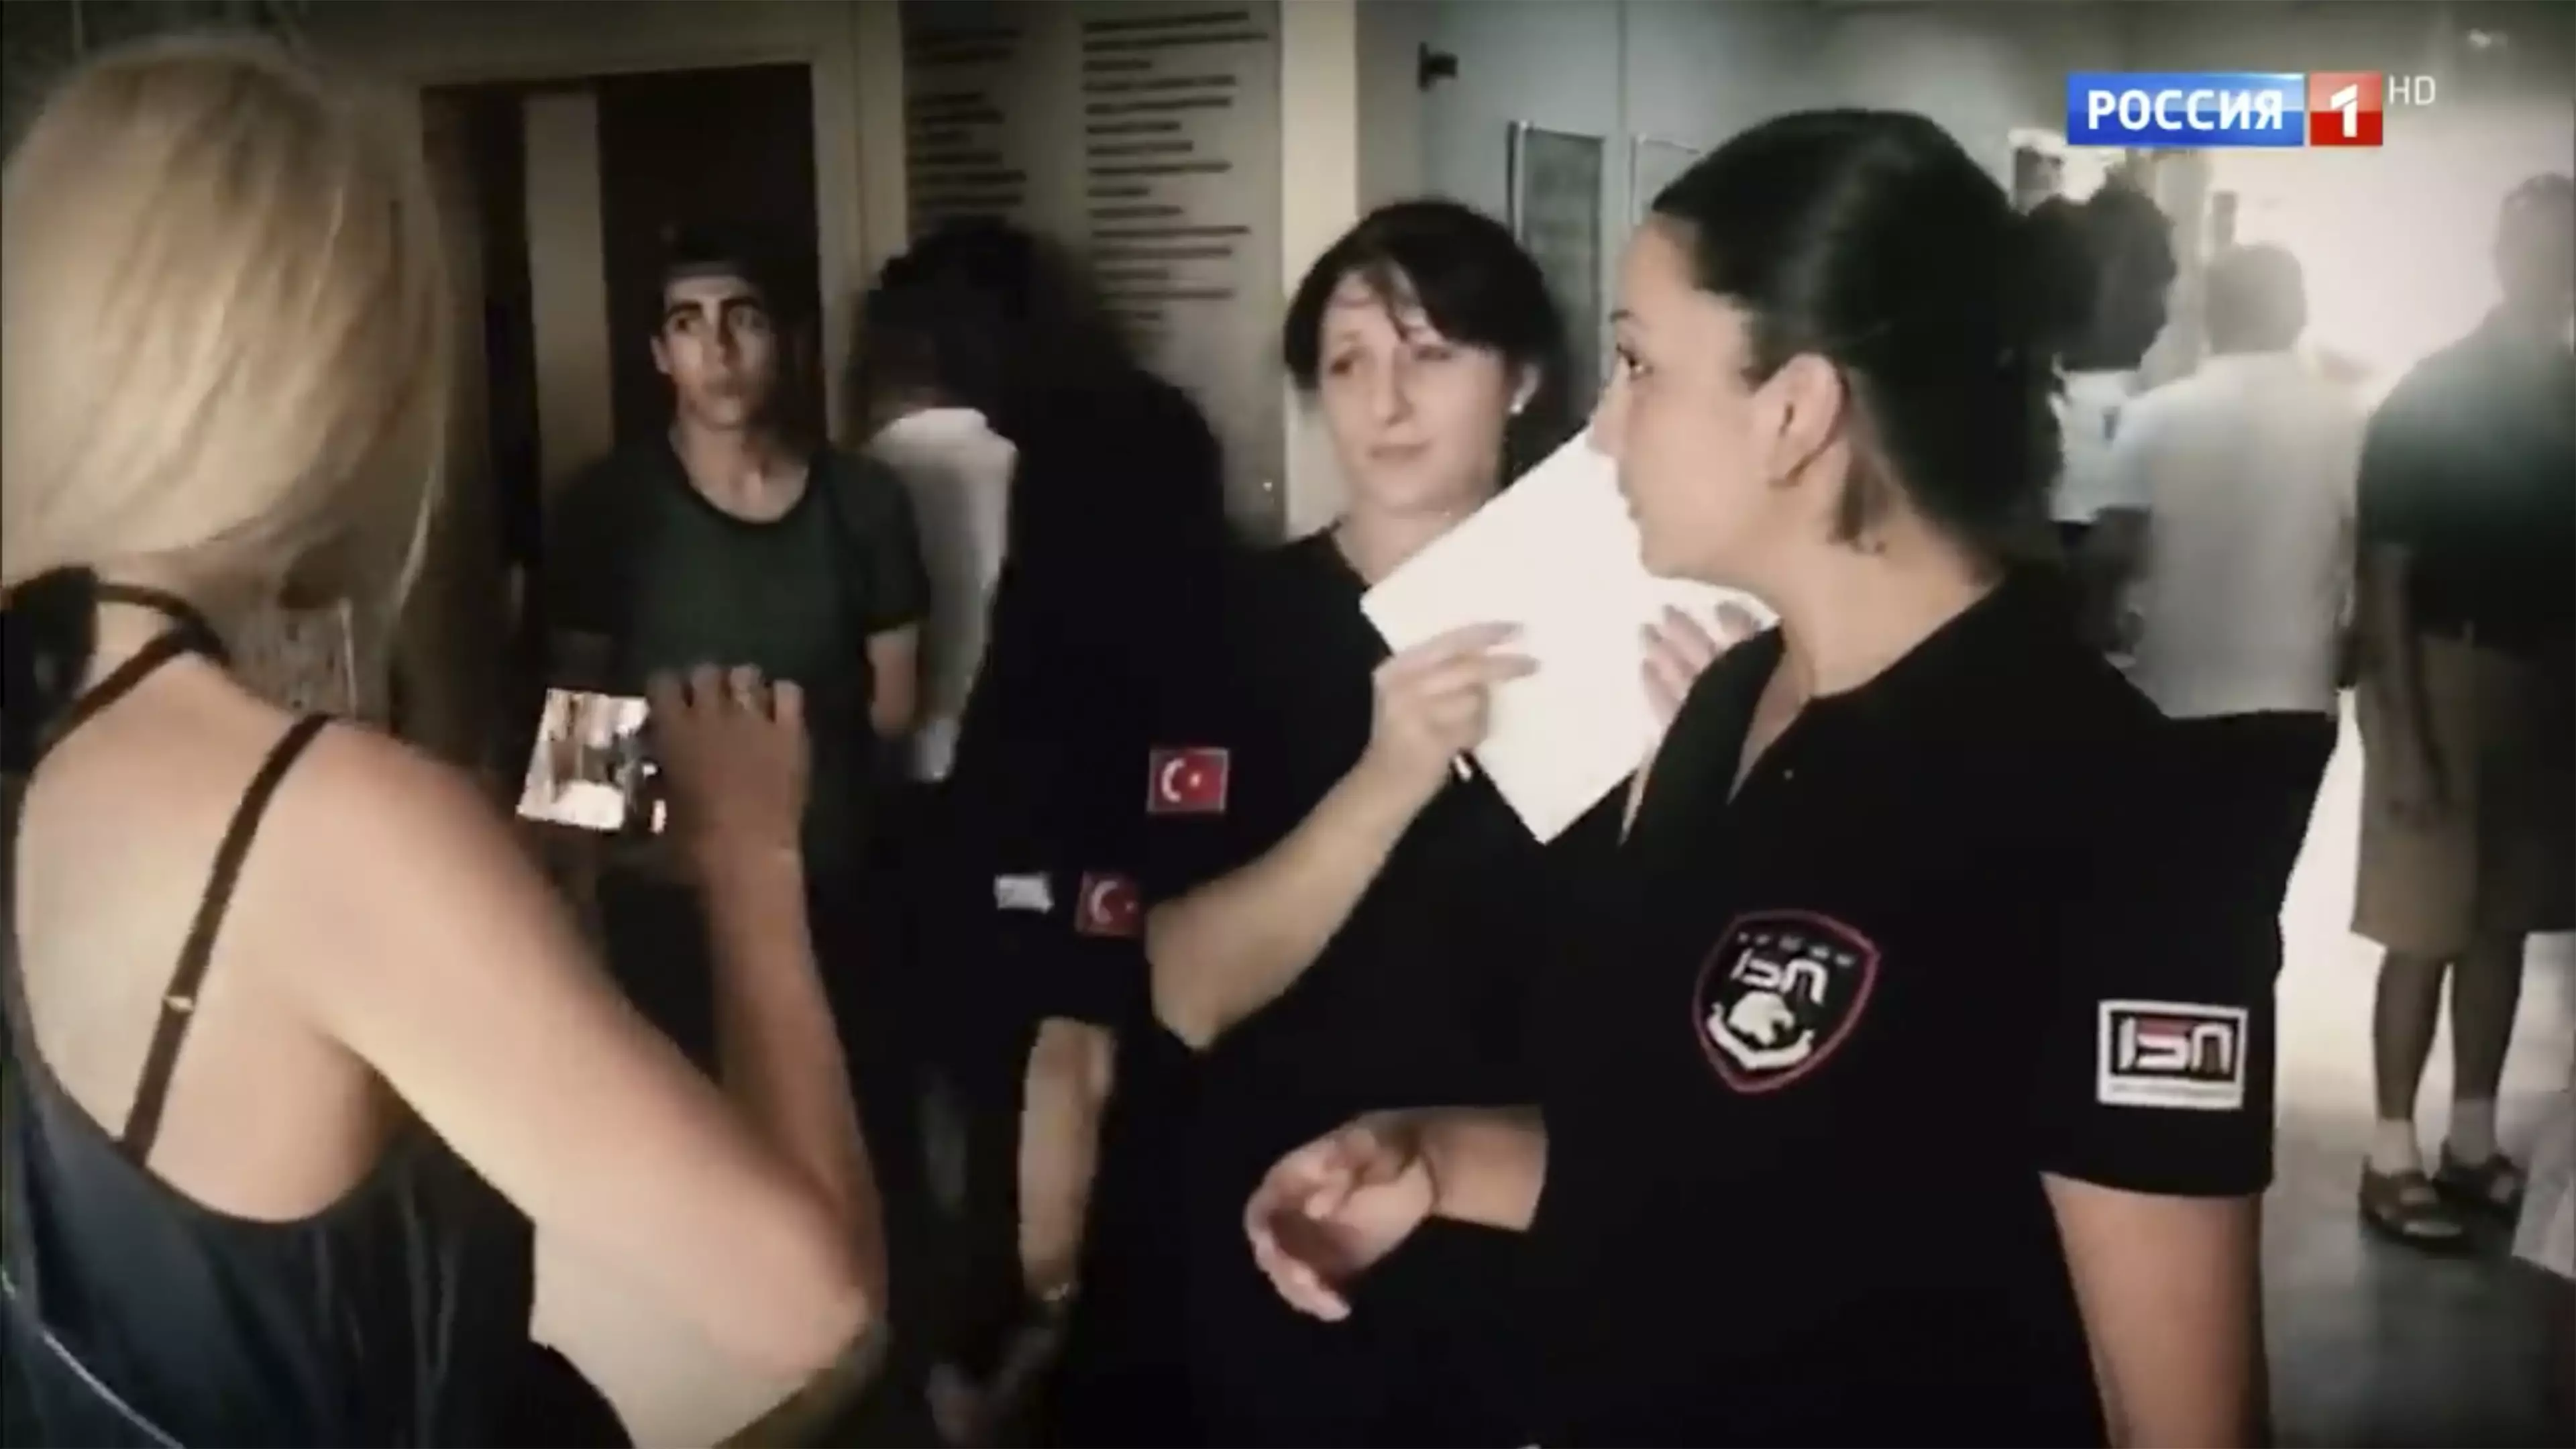 Tatiana Lanshakova (left) confronts staff at the hospital.